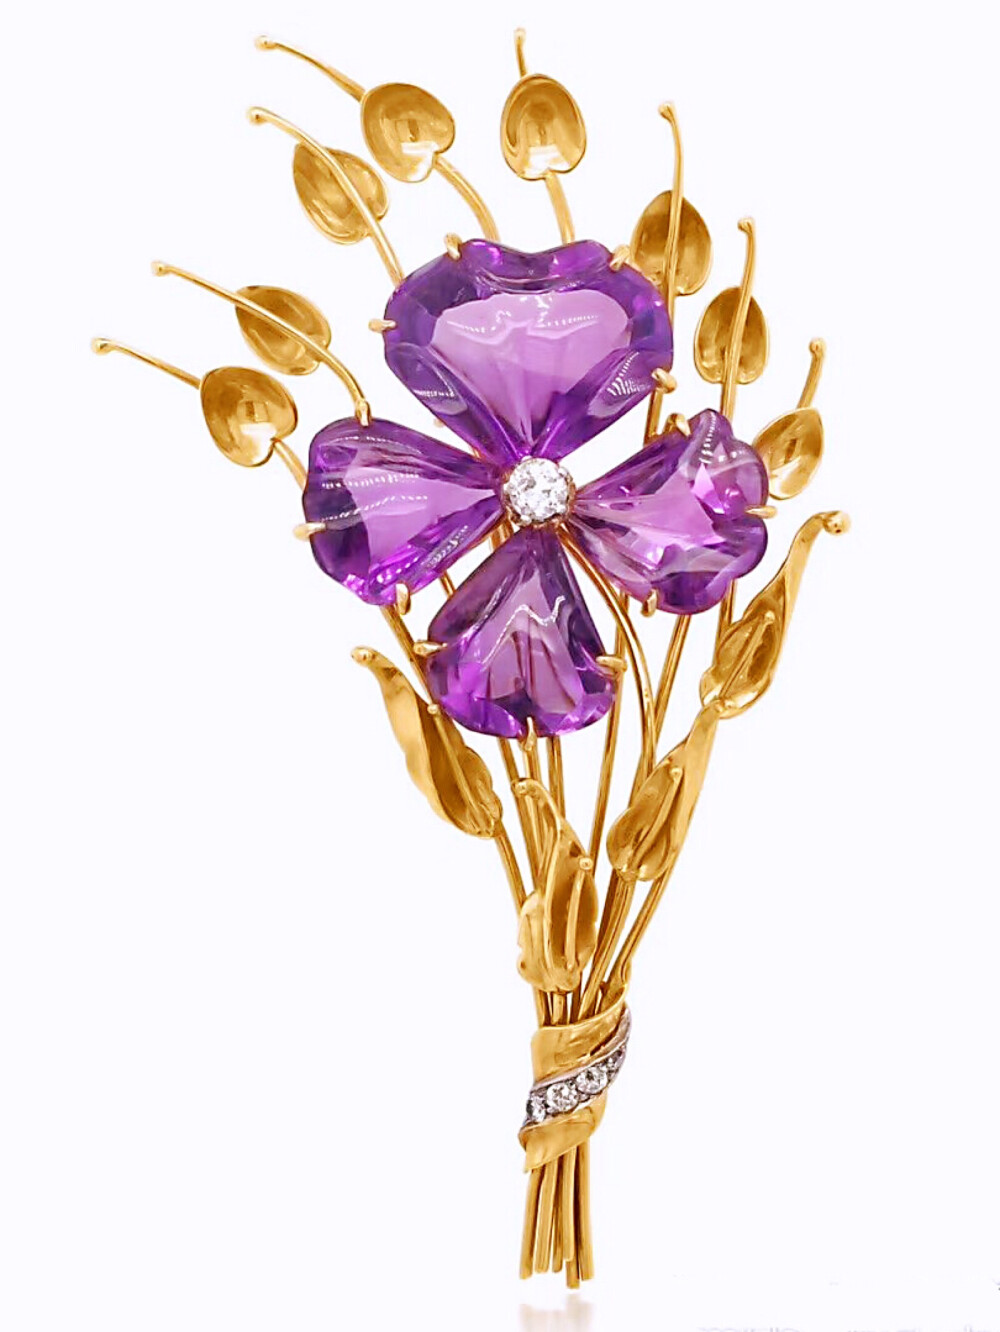 Retro时期 18K金紫水晶幸运草花型胸针
幸运草型的花朵，用迷人的紫水晶来展现，与18K金的叶子组合像是个花束，18K金，天然紫水晶，retro，尺寸5.5*9.5cm，重27.84g。